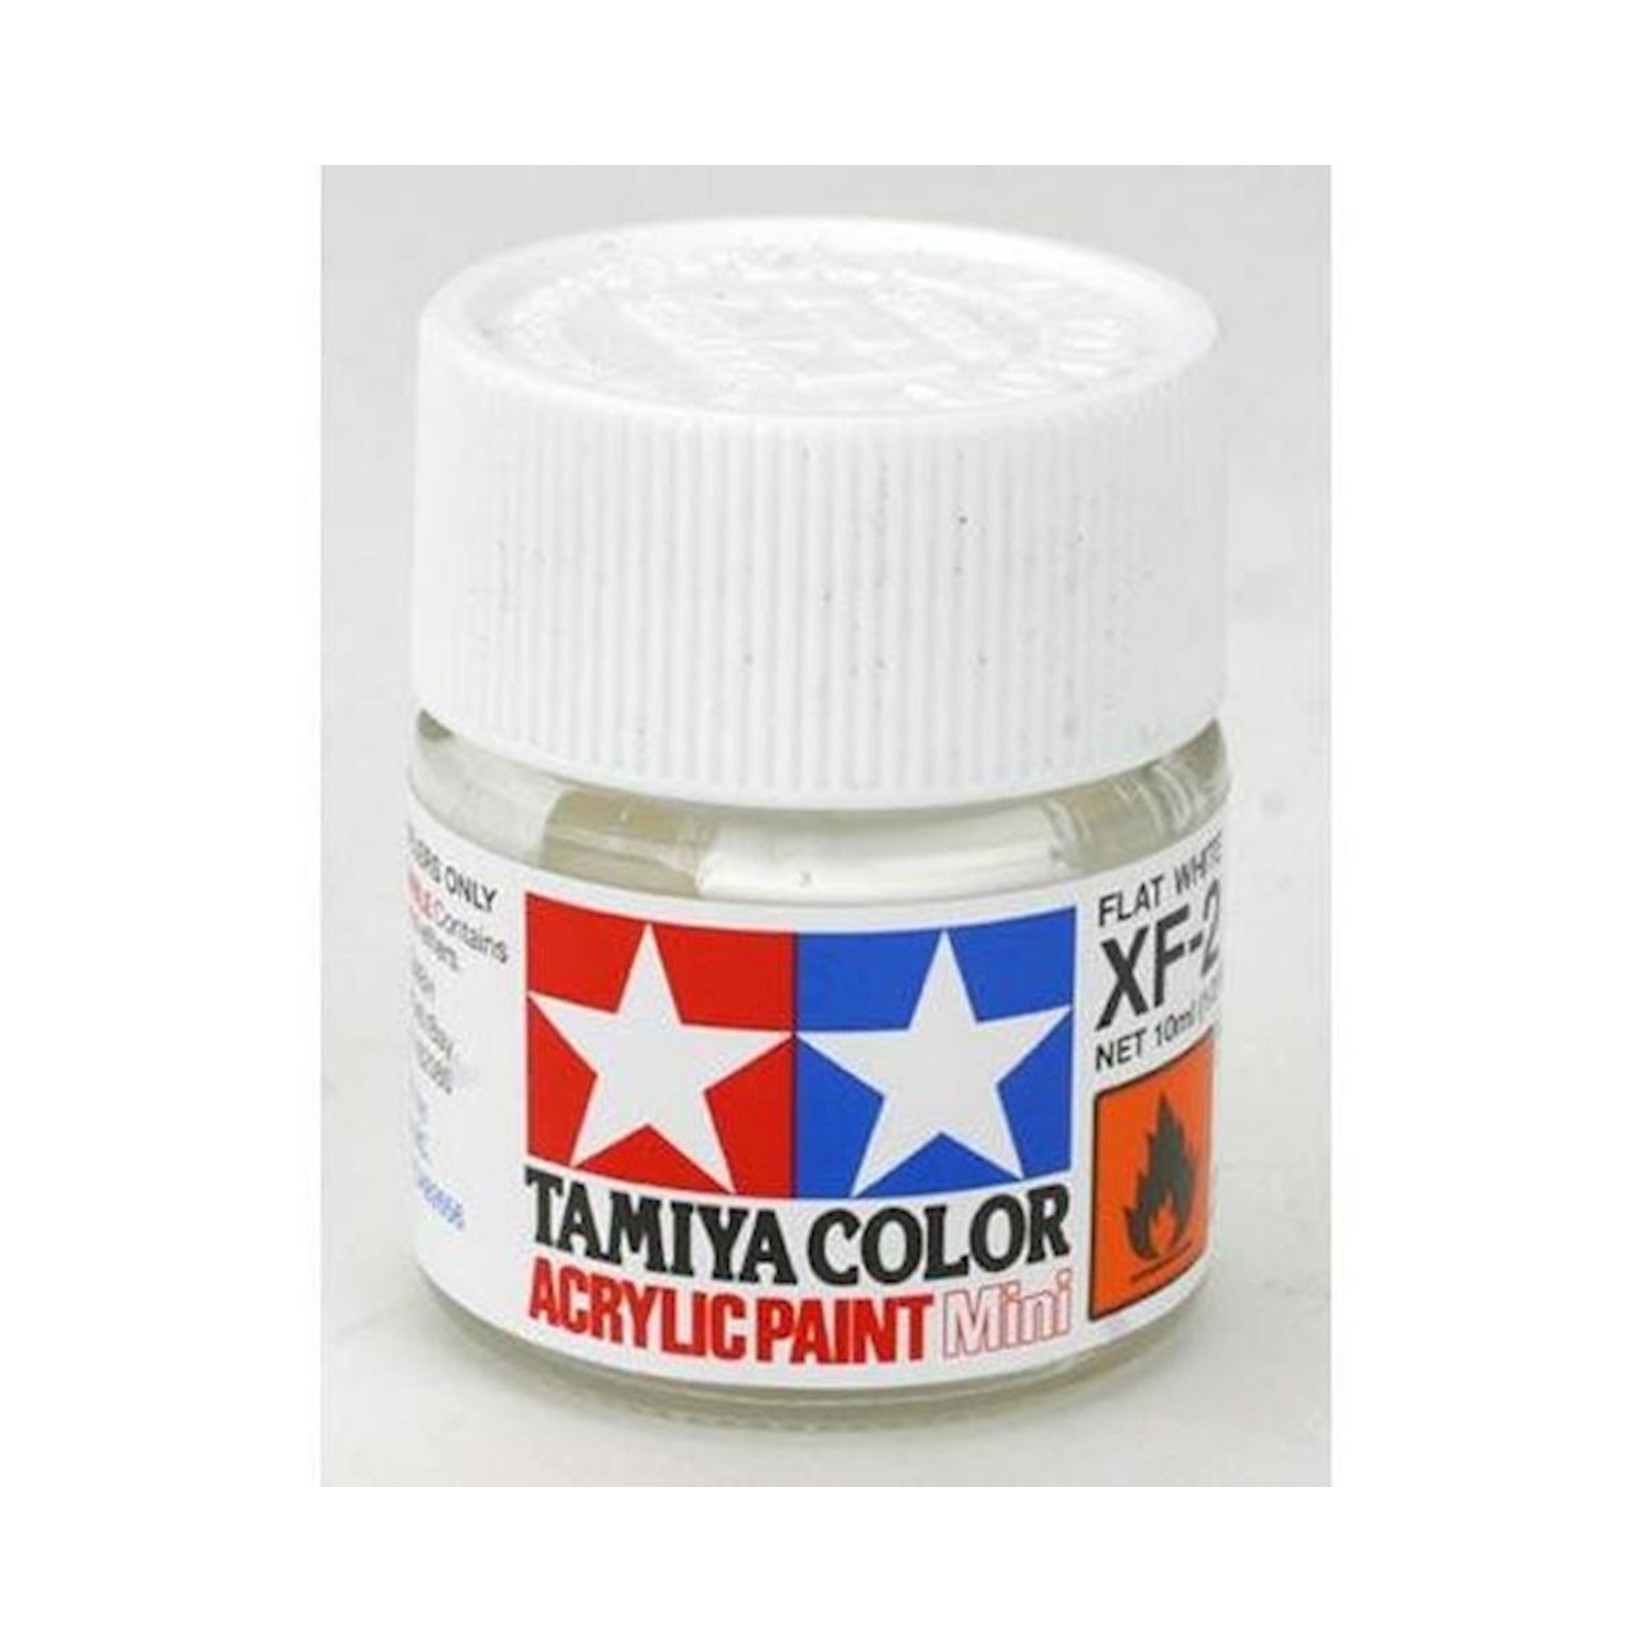 Tamiya Acrylic Mini XF2 Flat White